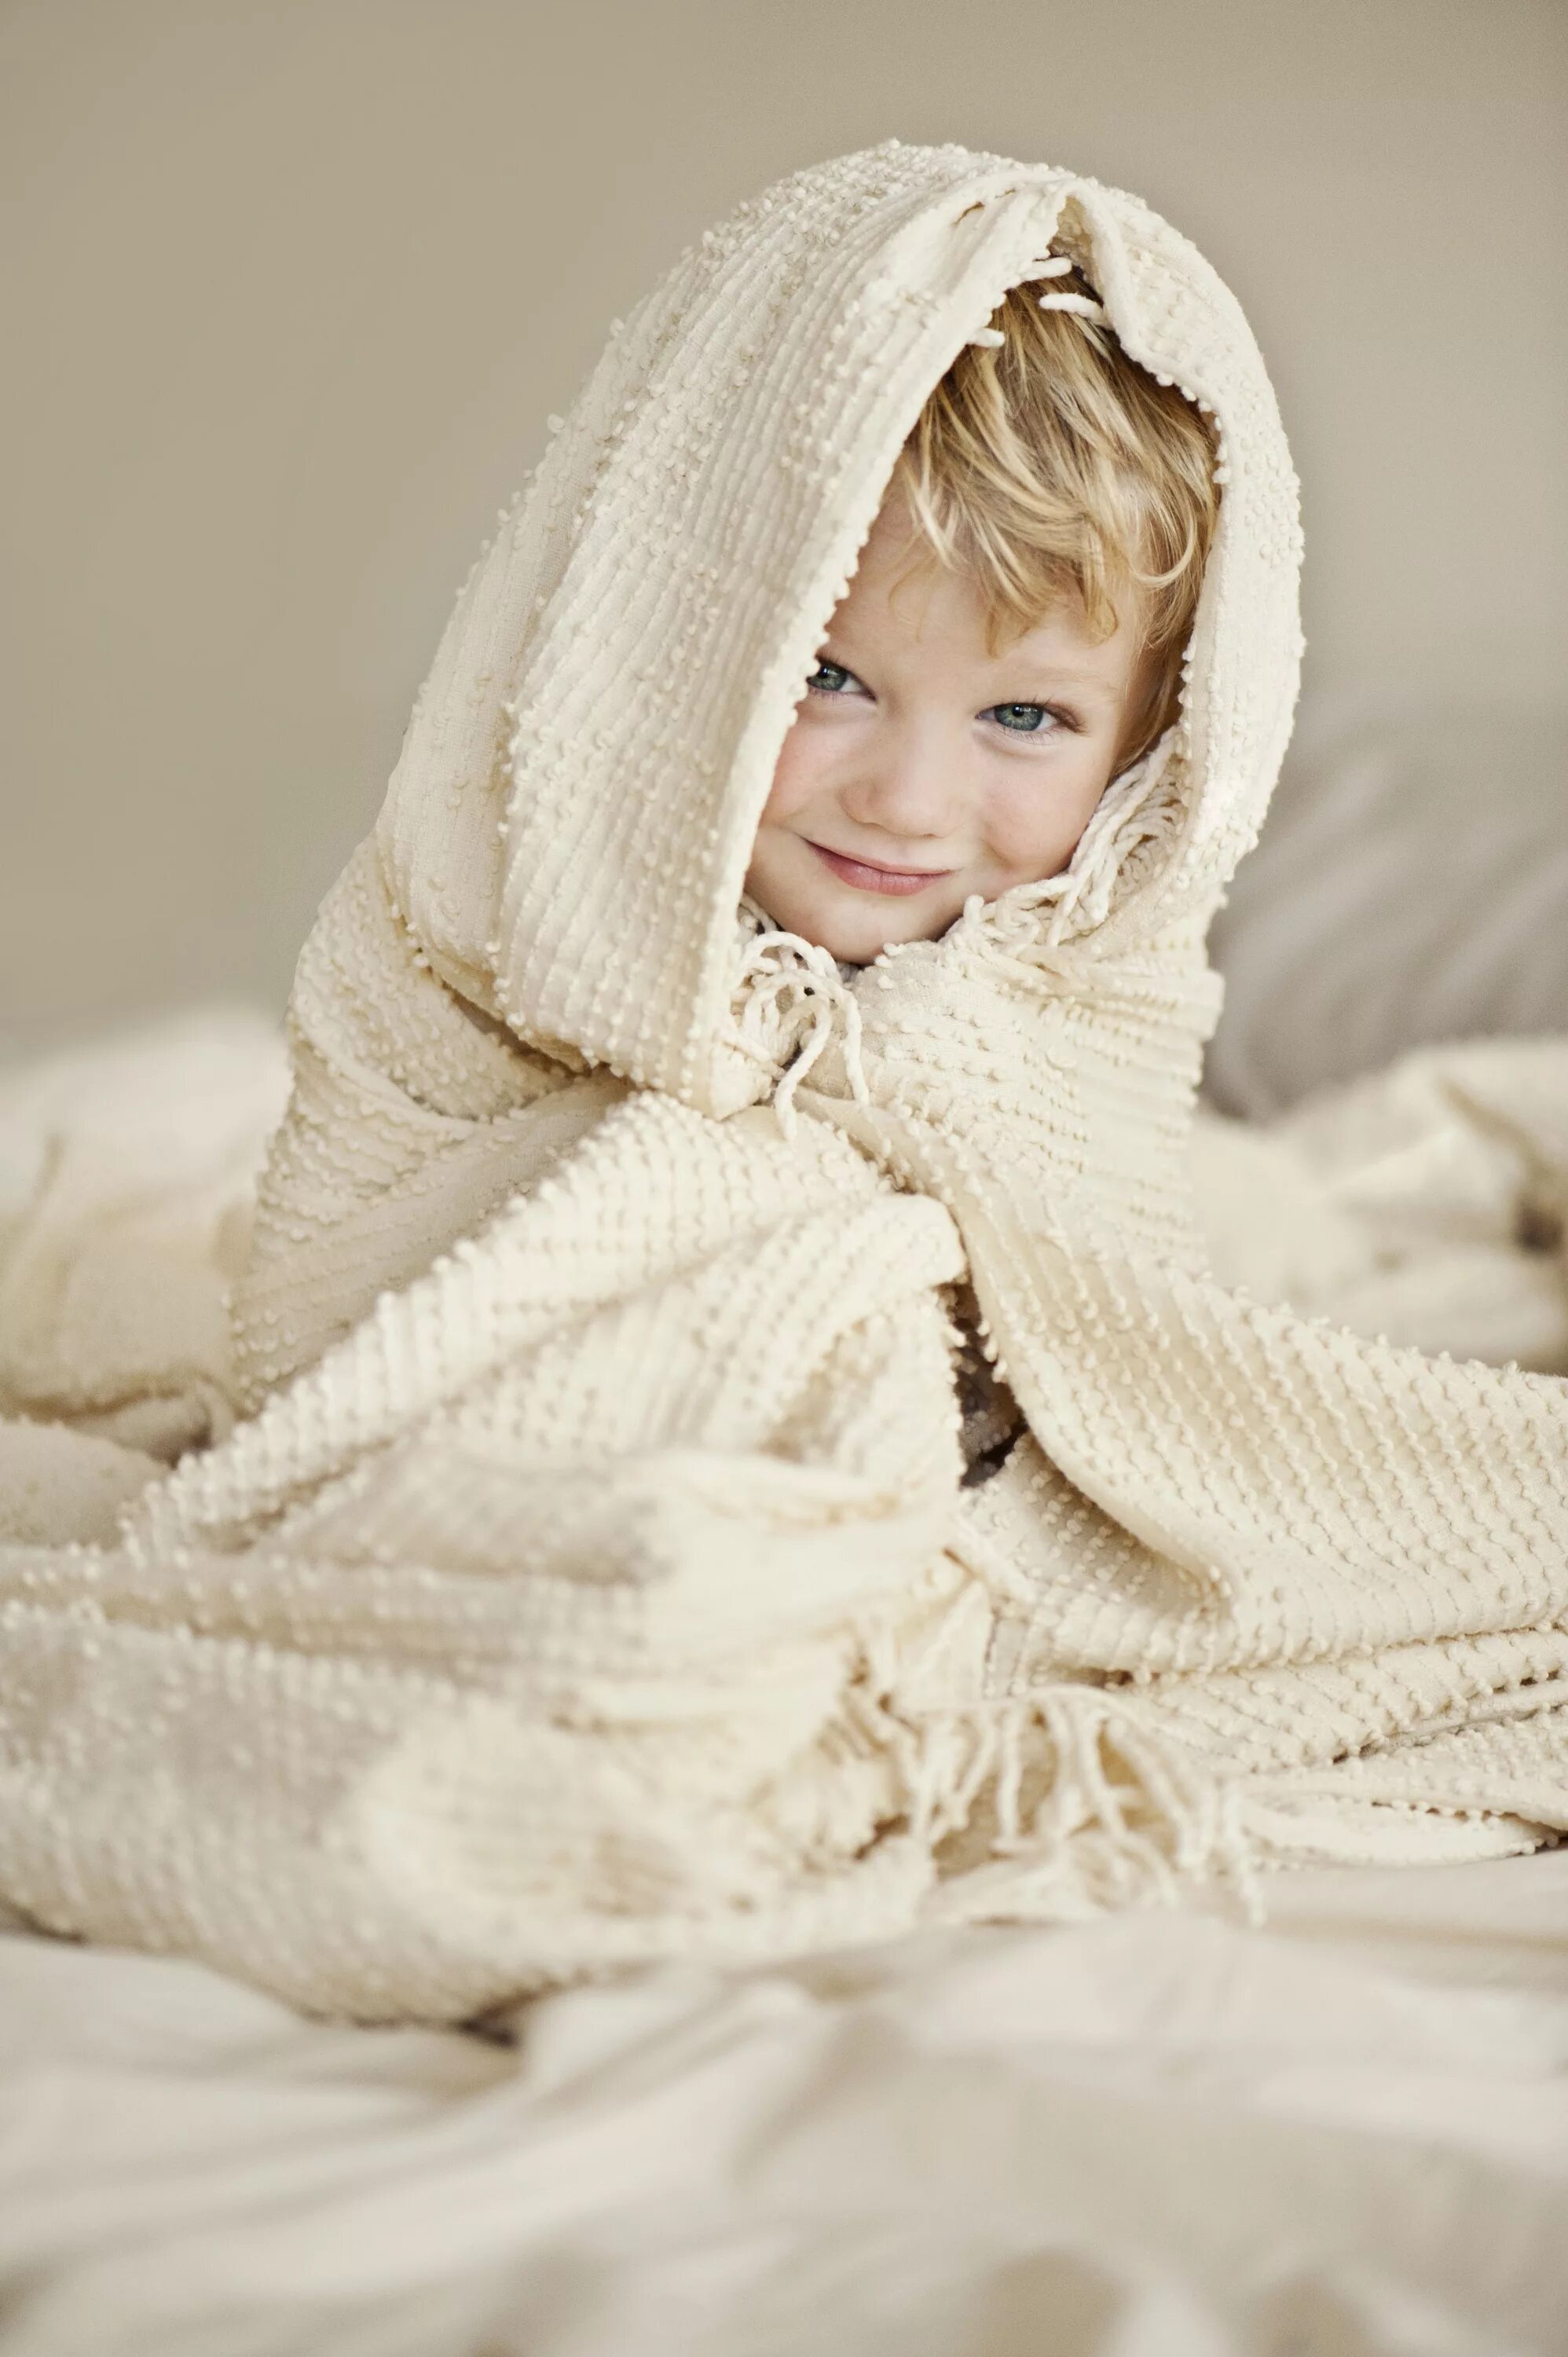 Под одеяльце. Ребенок в одеяле. Ребенок в пледе. Ребенок под одеялом. Ребенок укутан в плед.